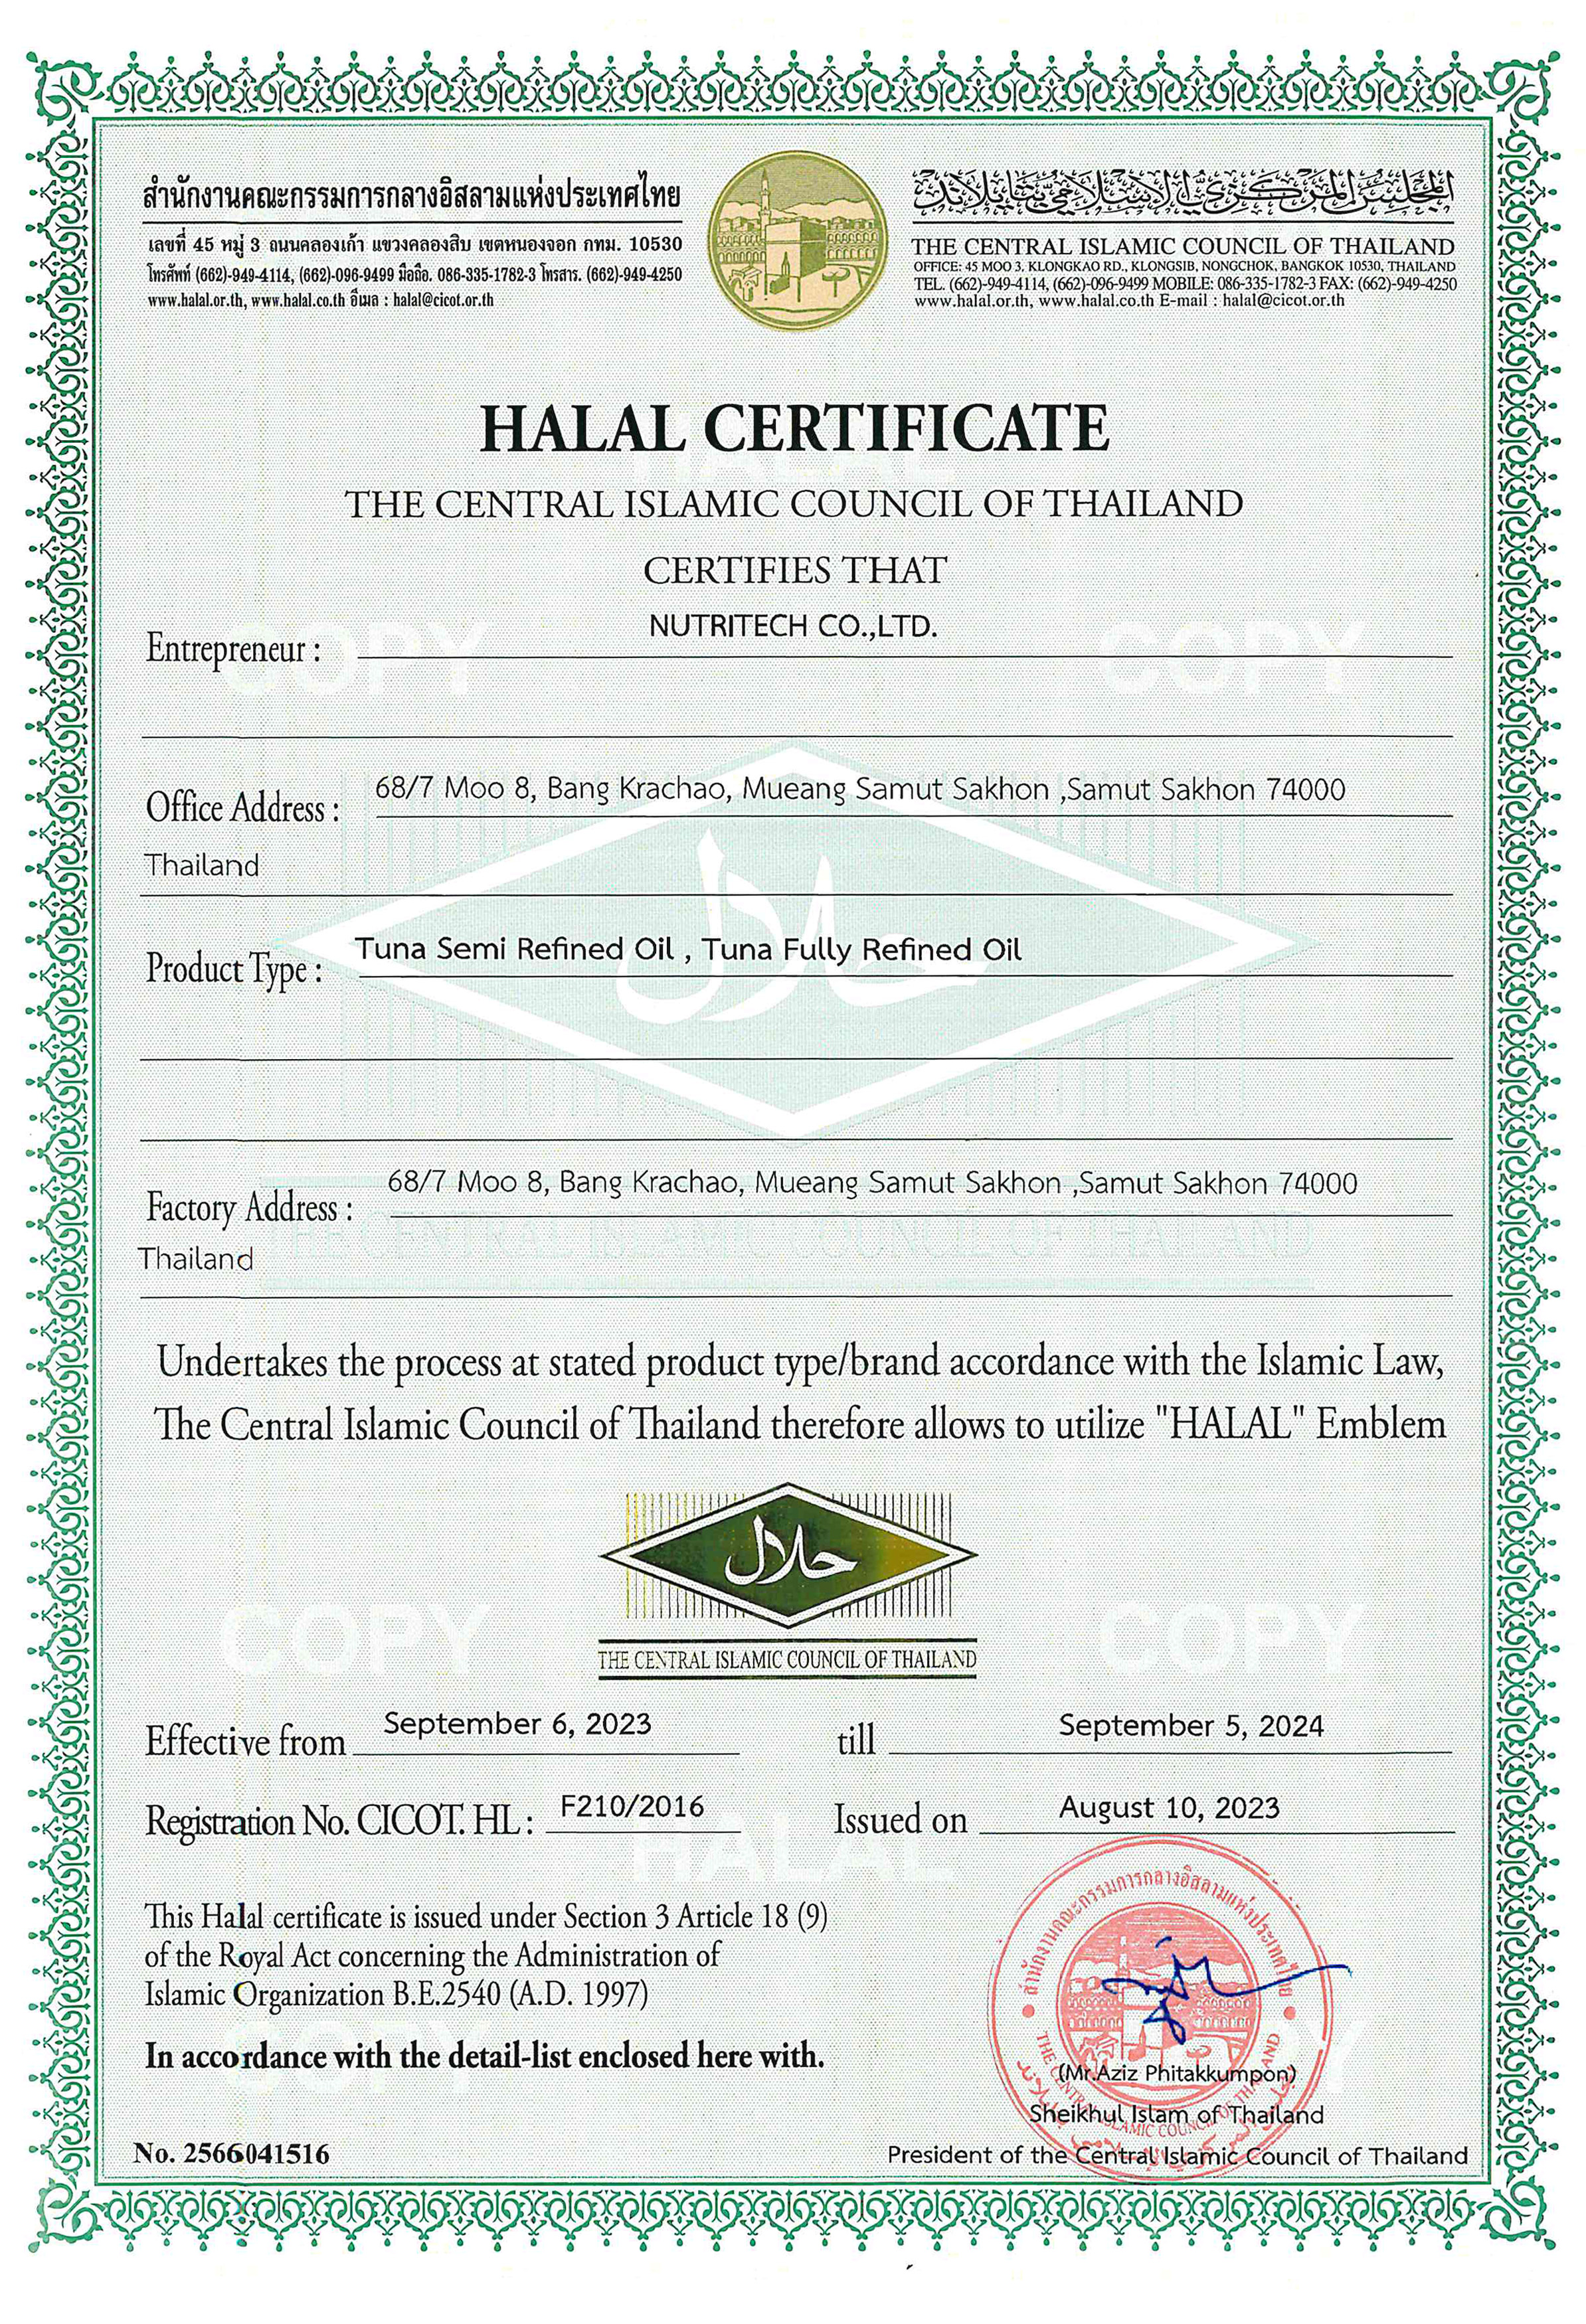 halal approval certification